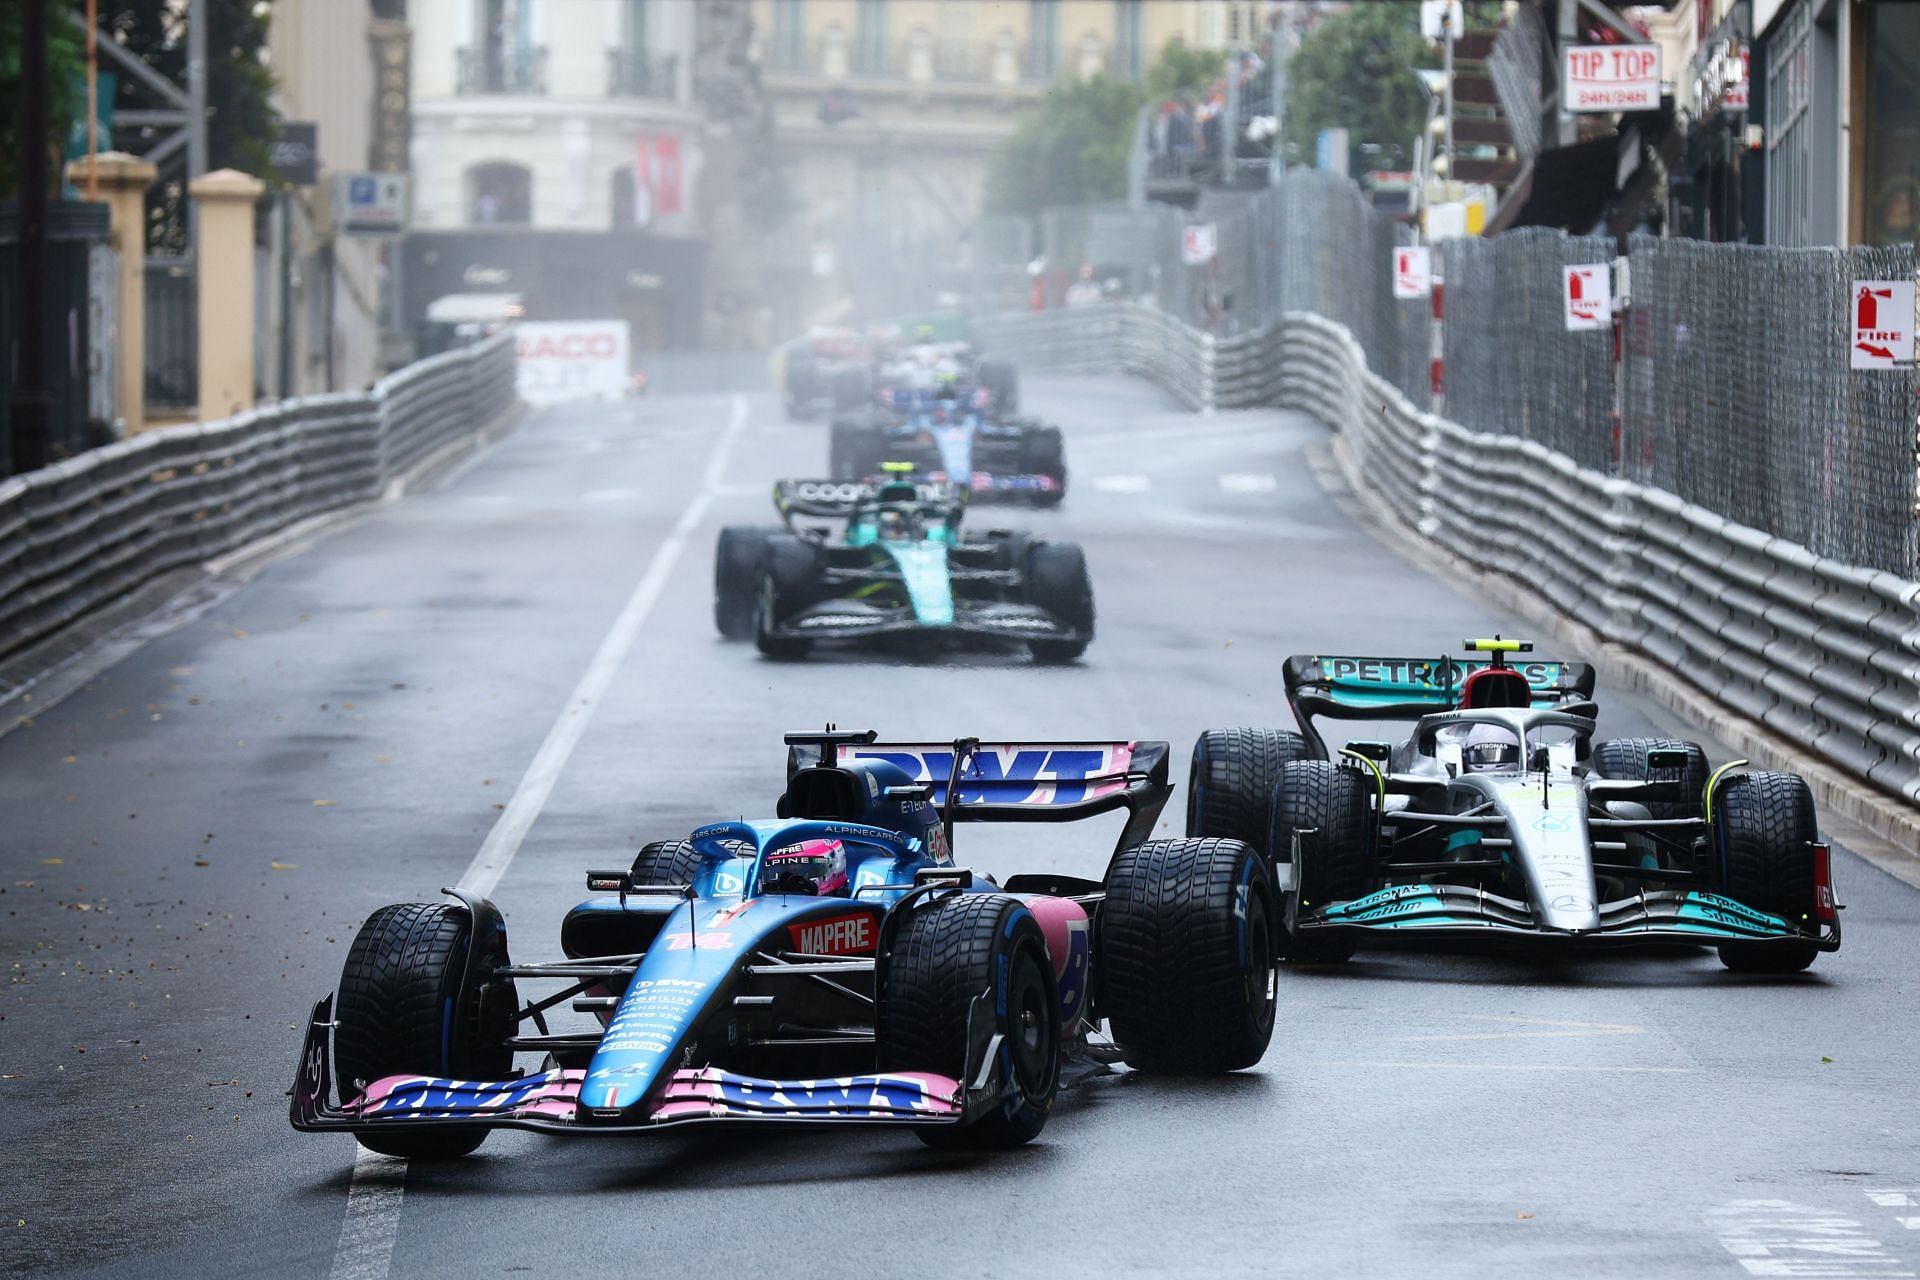 F1 Grand Prix of Monaco - A frustrated Lewis Hamilton trails Fernando Alonso